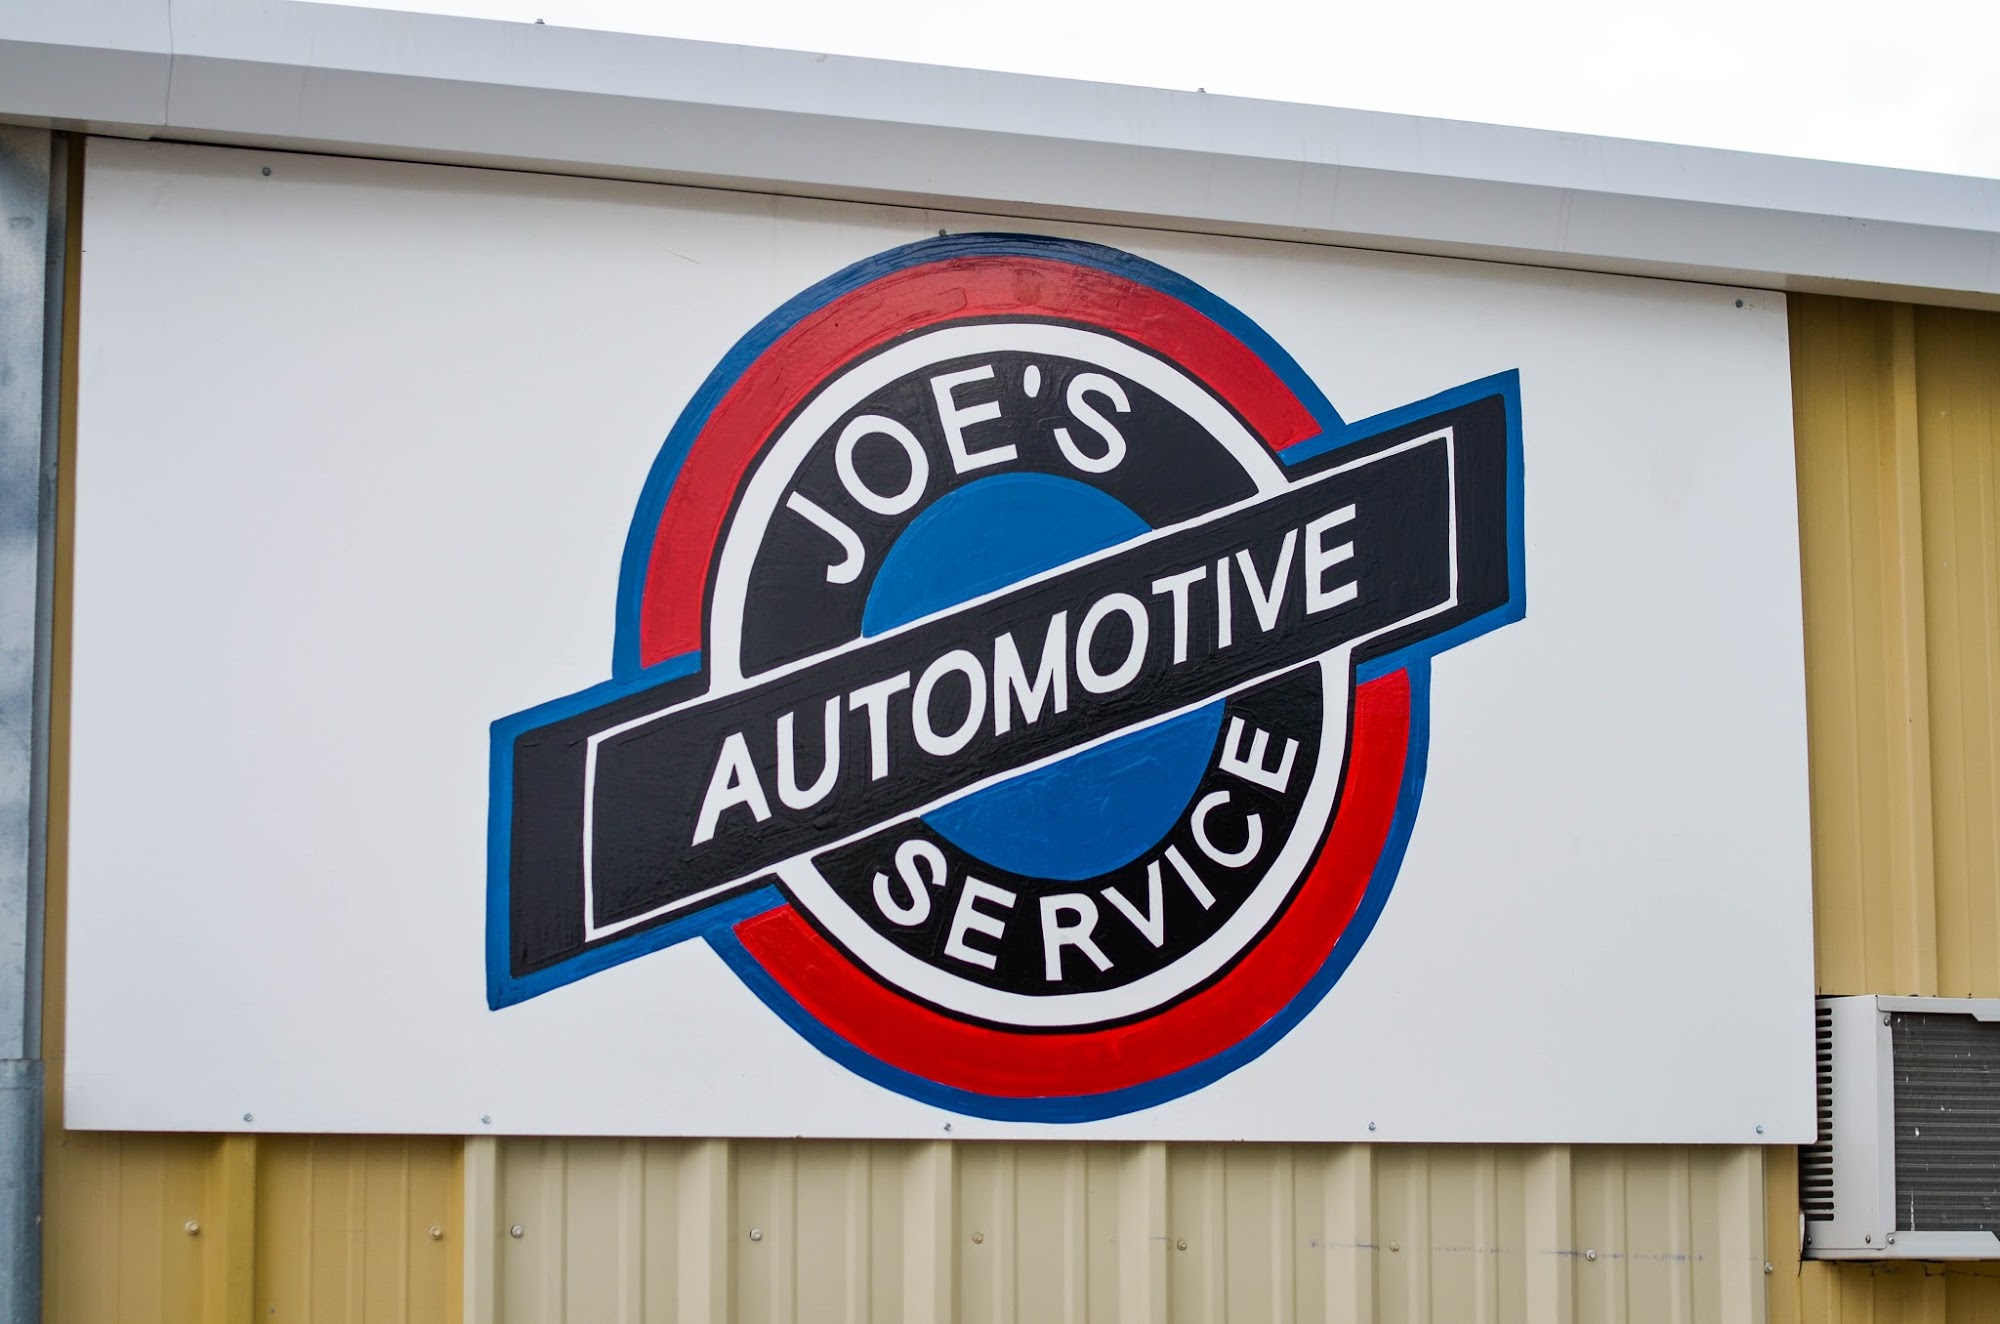 Joe's Automotive Service